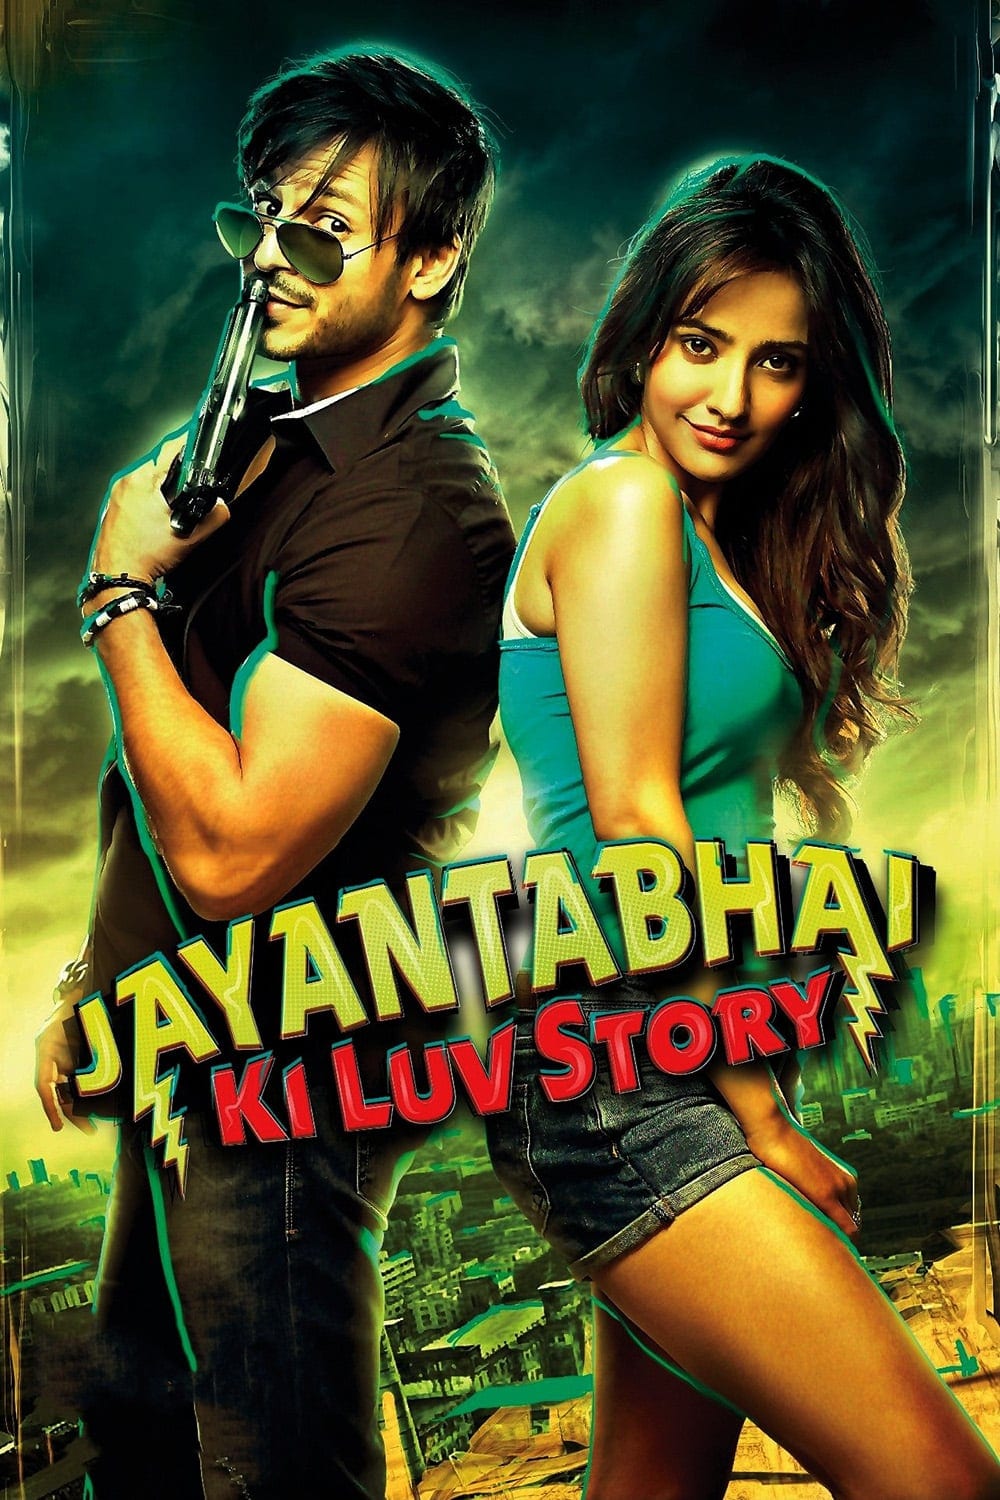 Poster for the movie "Jayantabhai Ki Luv Story"